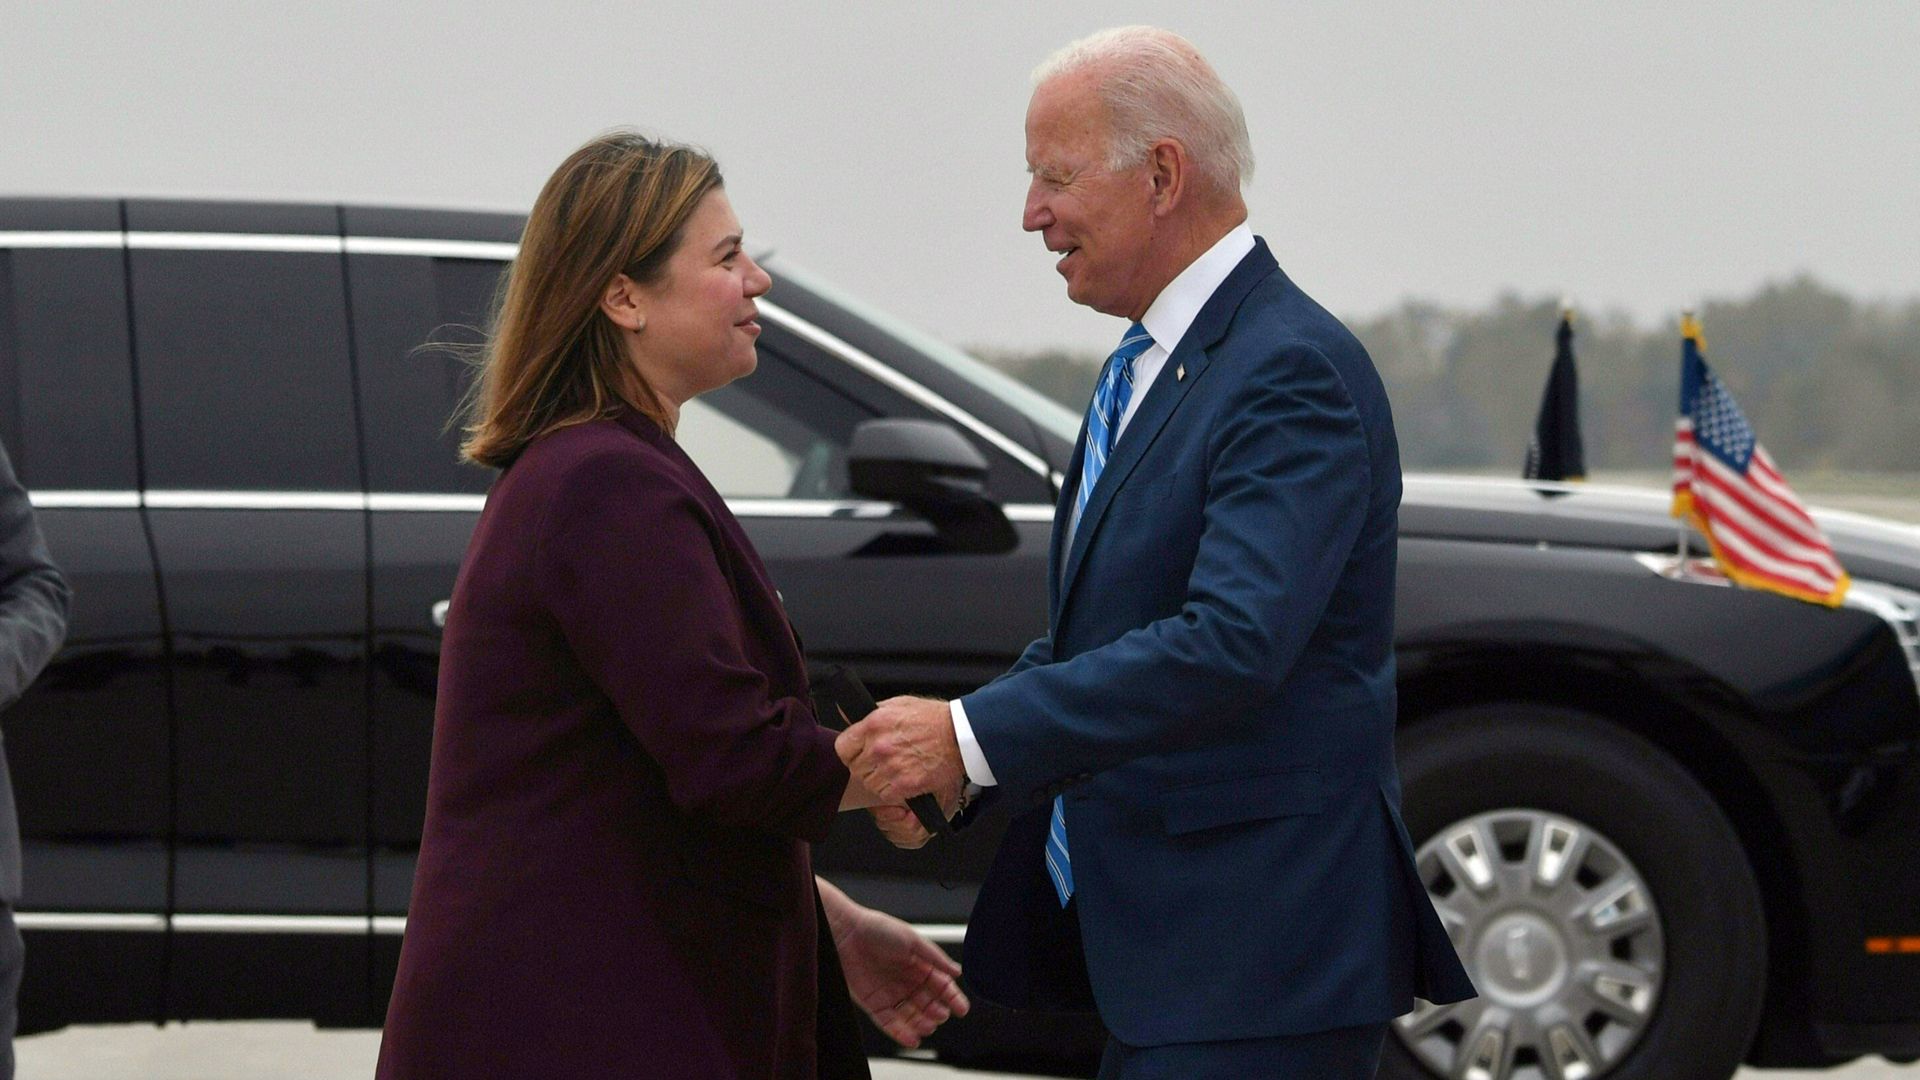 President Biden is seen greeting Rep. Elissa Slotkin after arriving in Michigan in October.